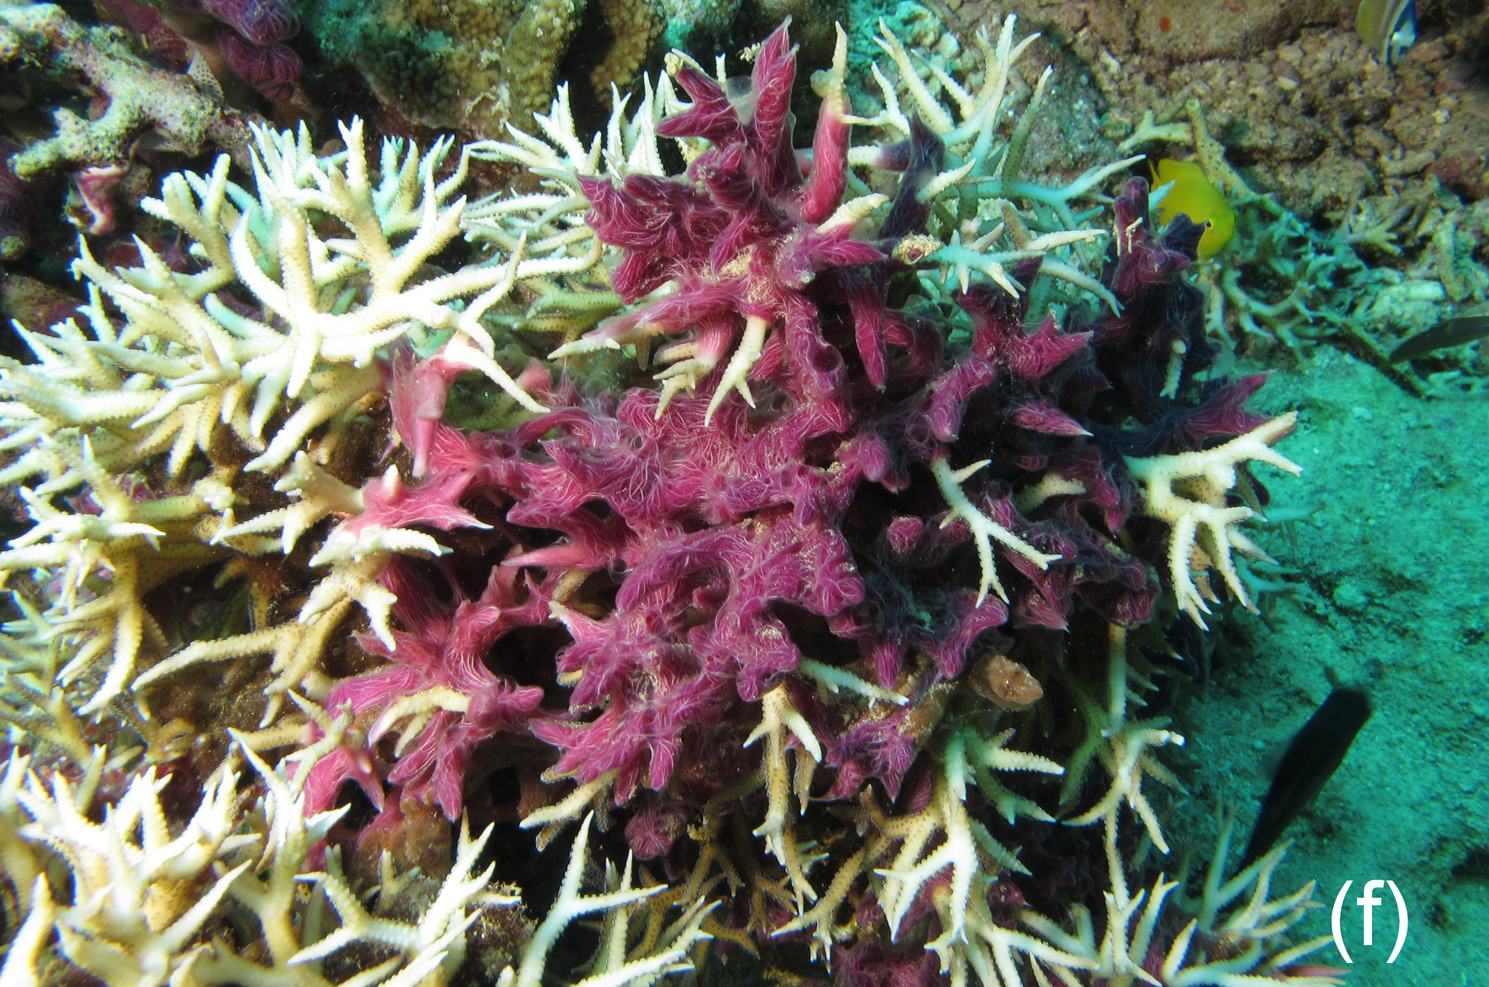 Baseline reef health surveys at Bangka Island reveal new threats